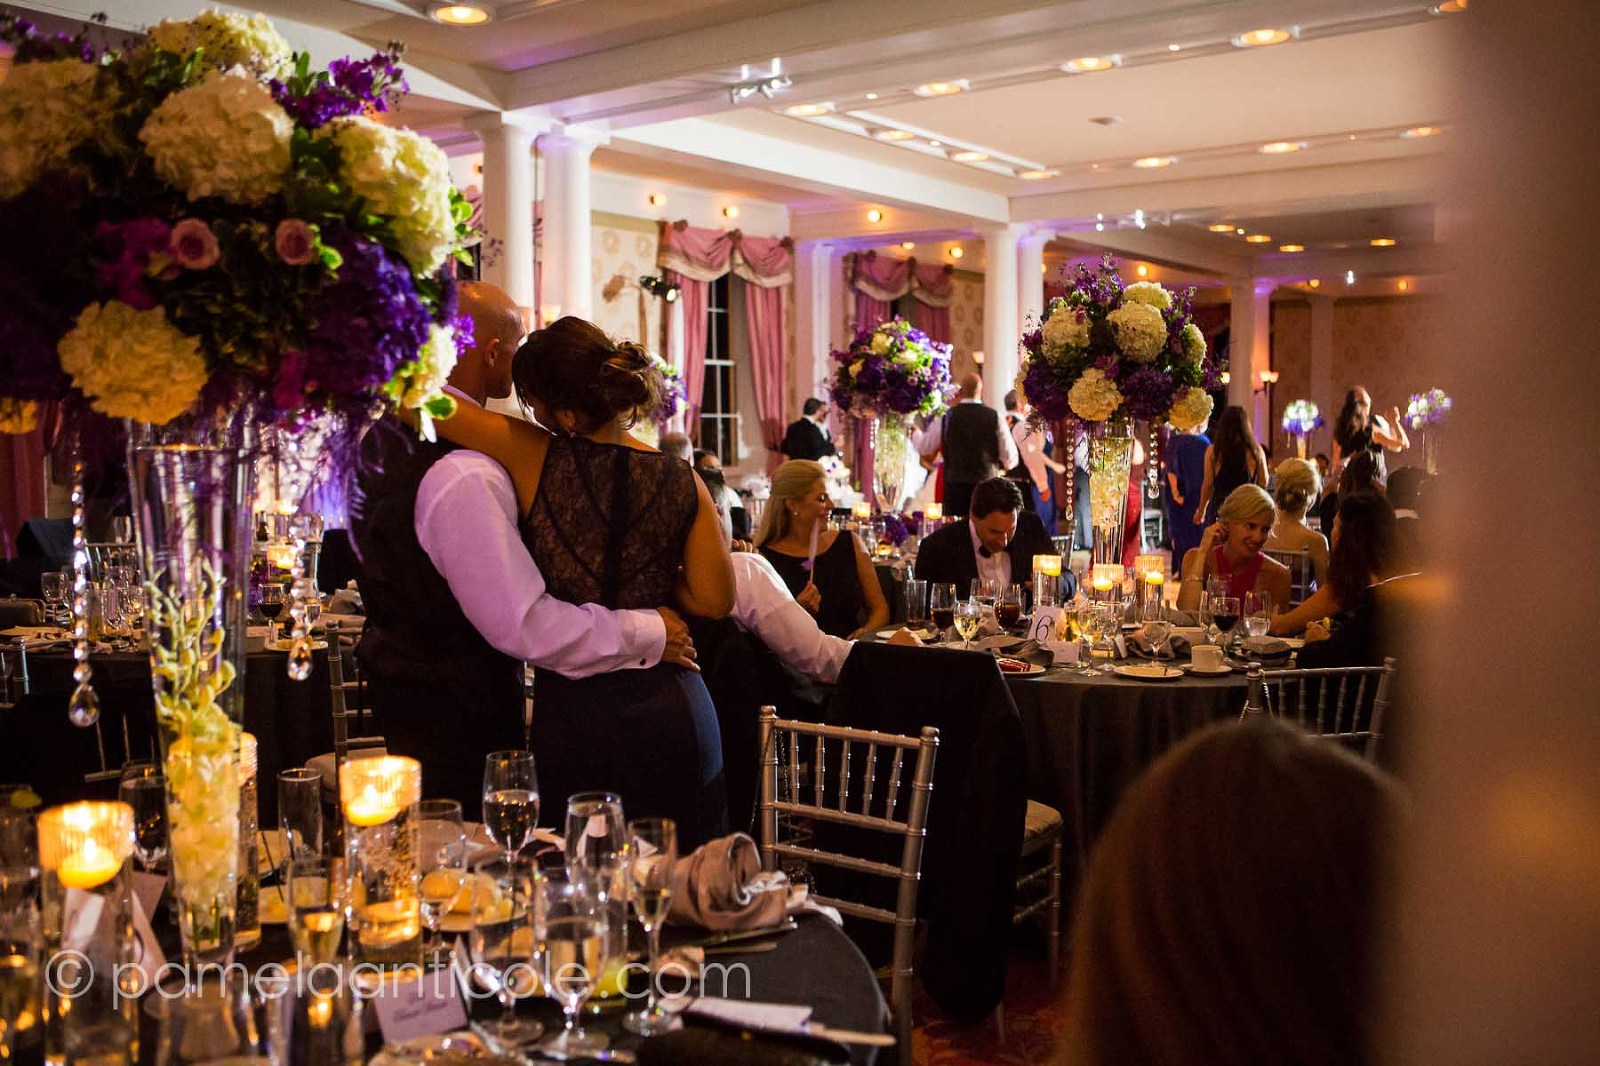 documentary wedding photos at bedford springs colonnade ballroom reception